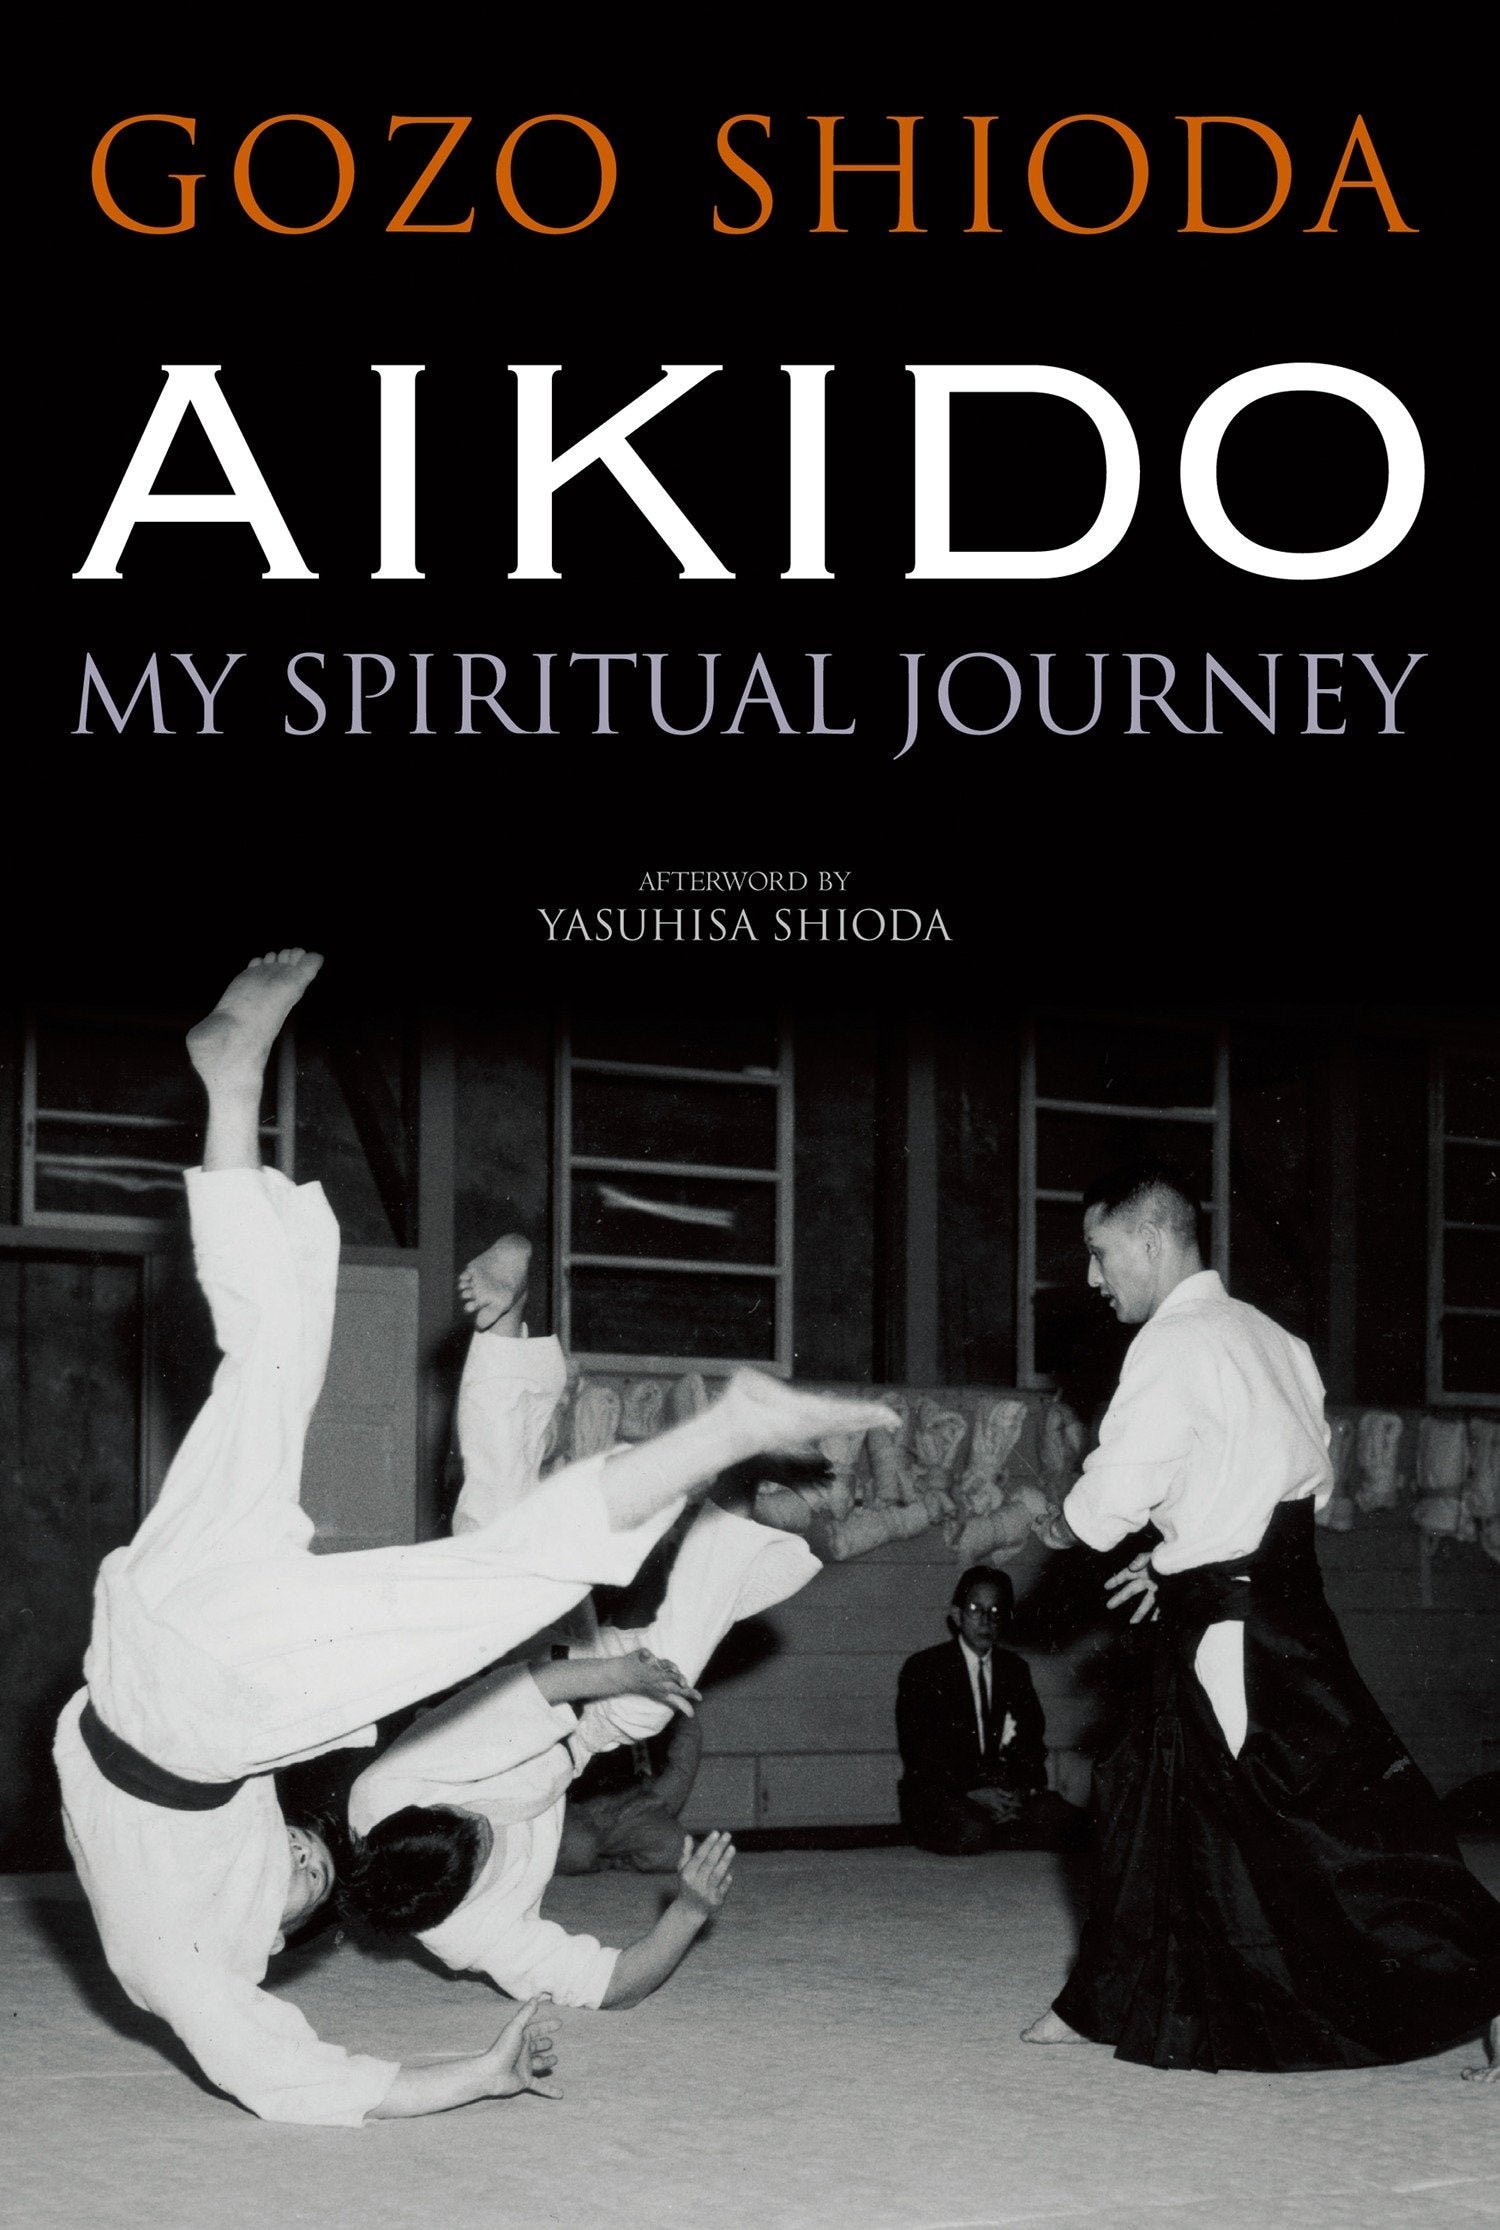 Aikido: My Spiritual Journey (Hardcover) Book by Gozo Shioda - Budovideos